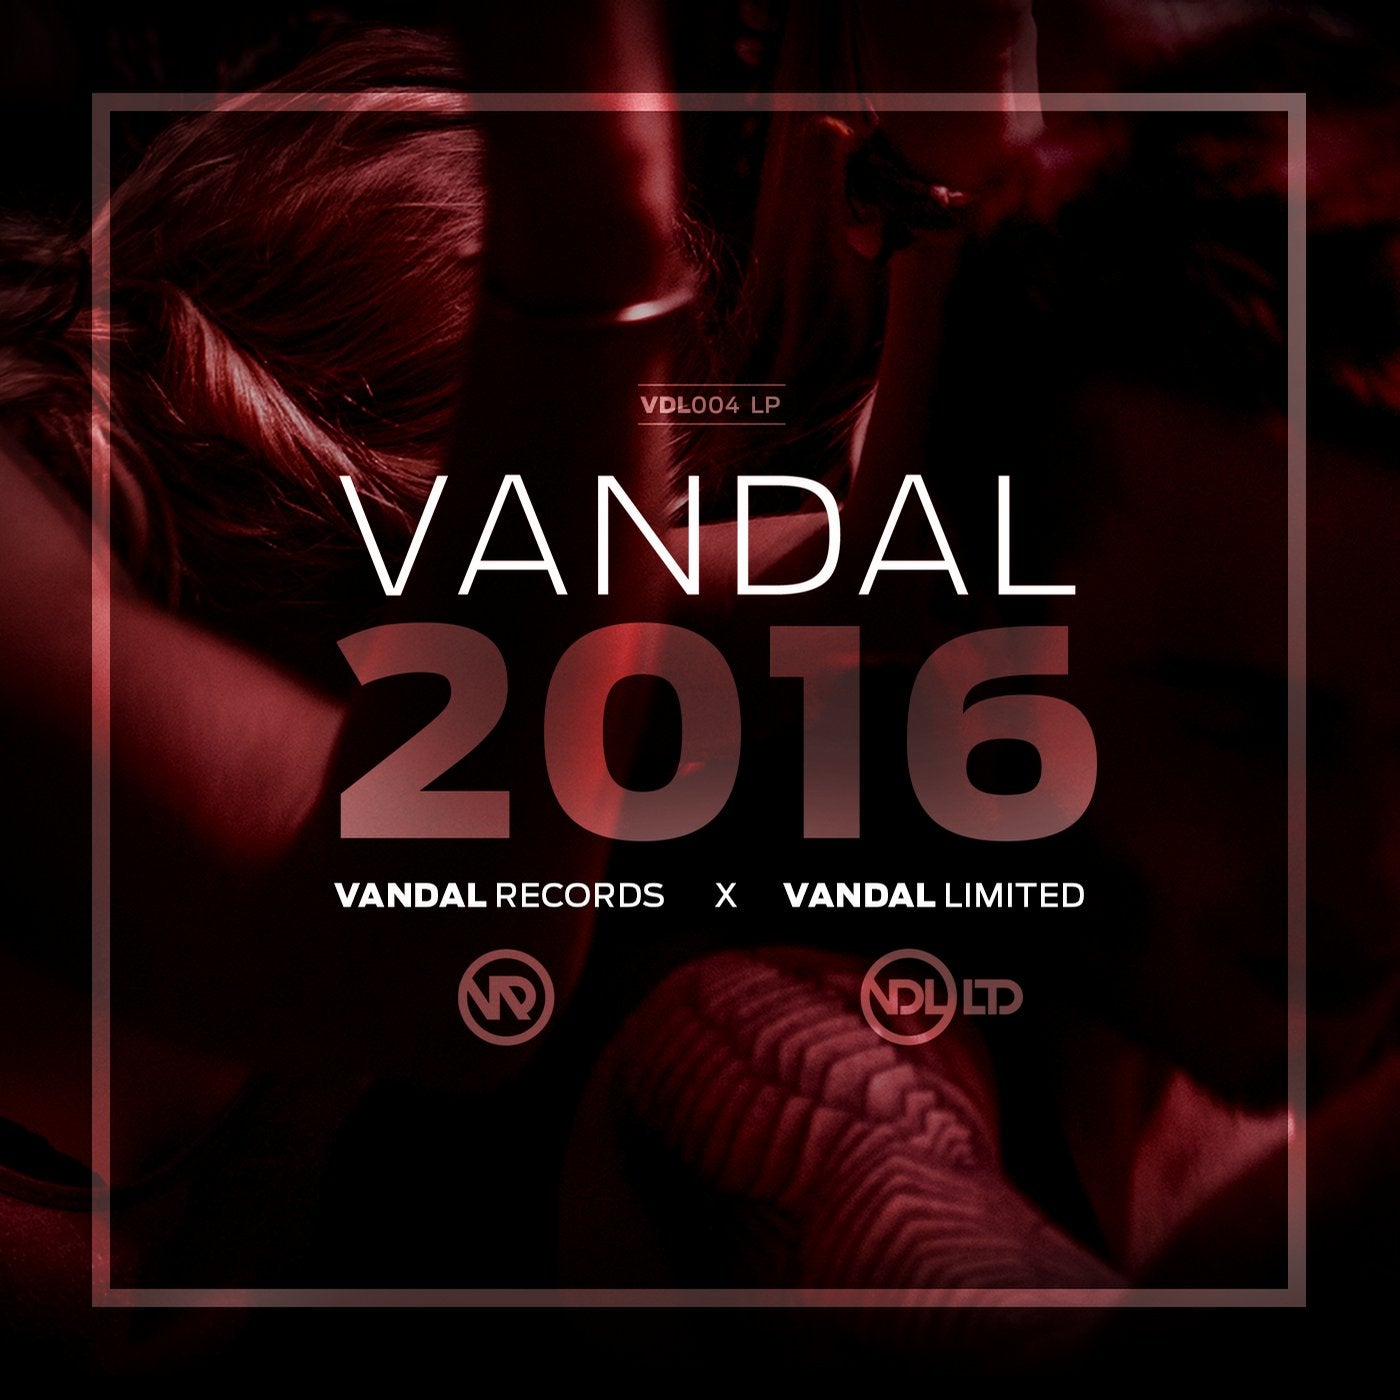 VANDAL 2016